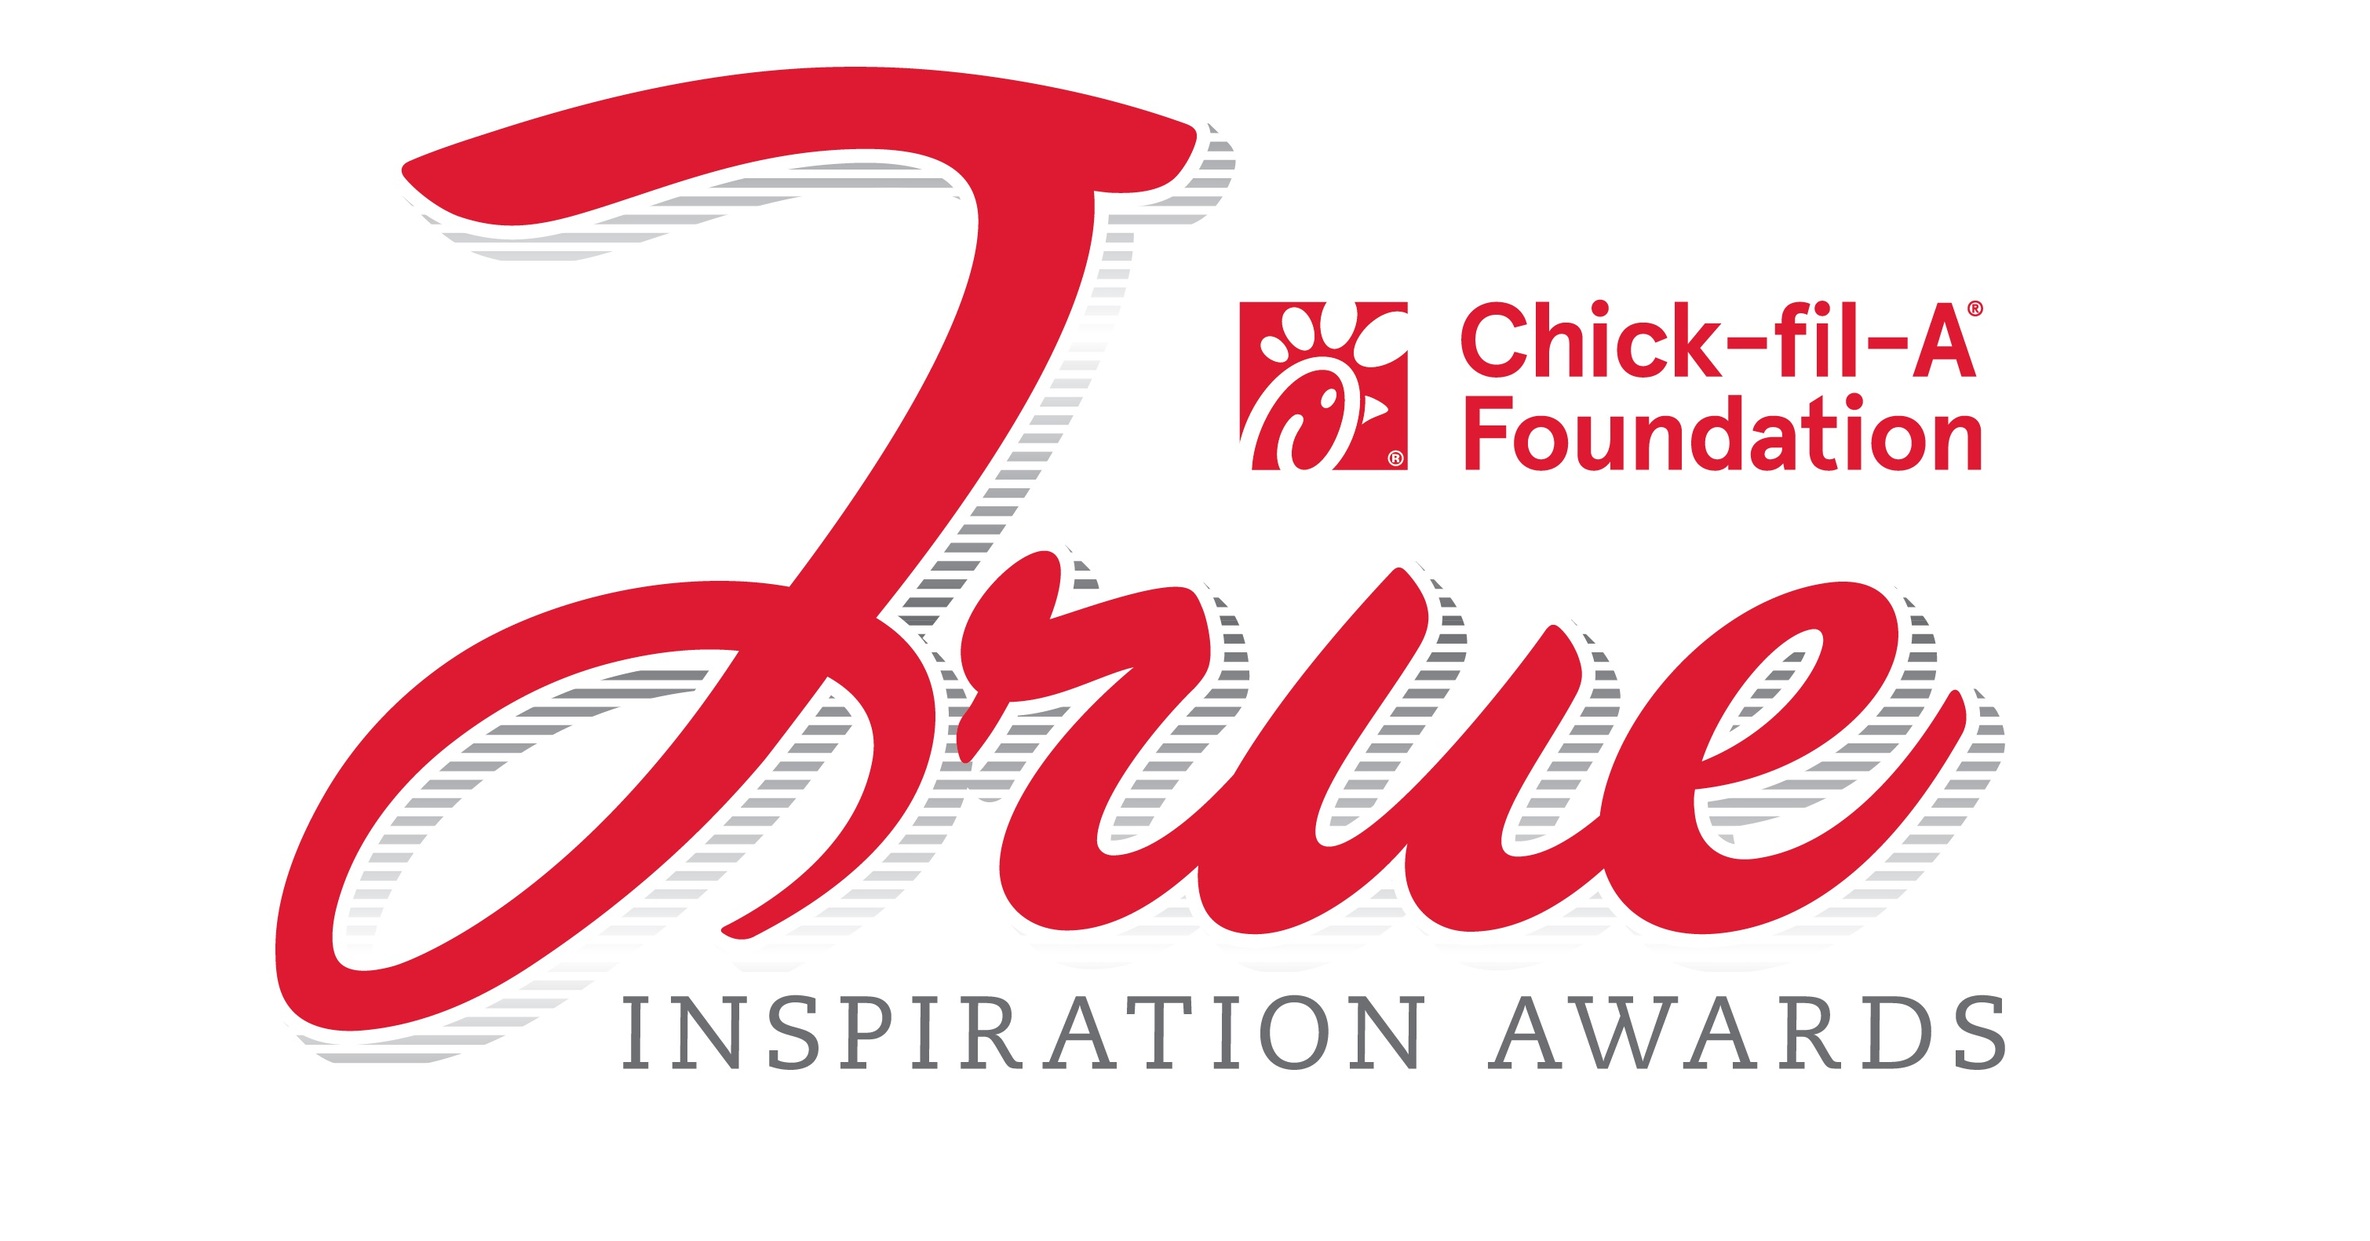 Chick-fil-A True Inspiration Awards Baner